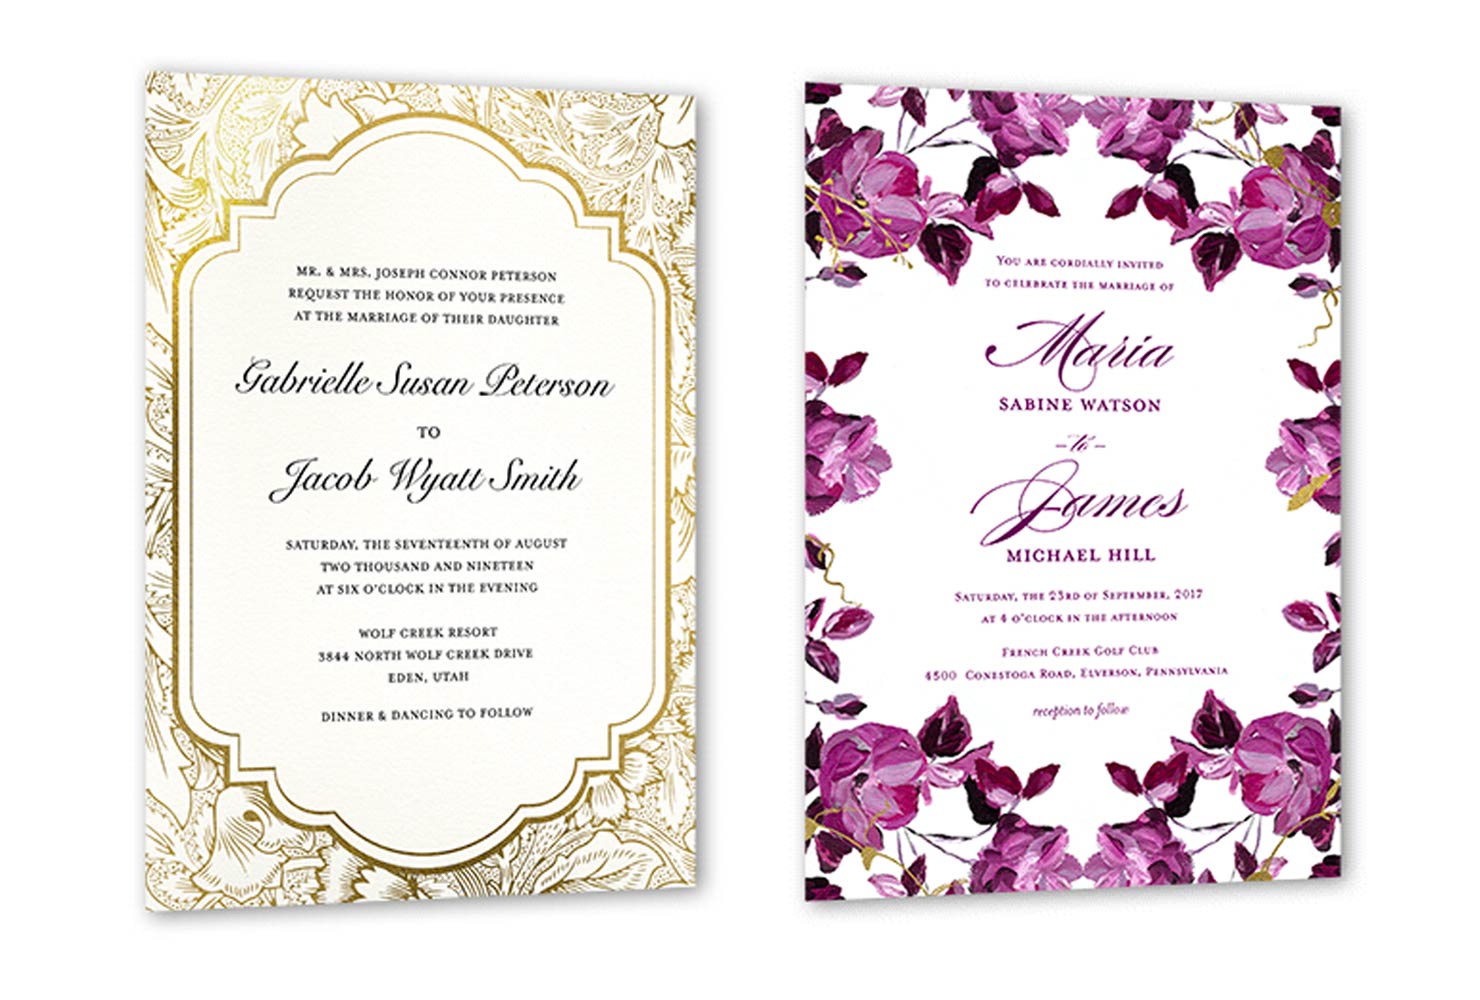 Sample Wedding Invitation Cards Templates 2